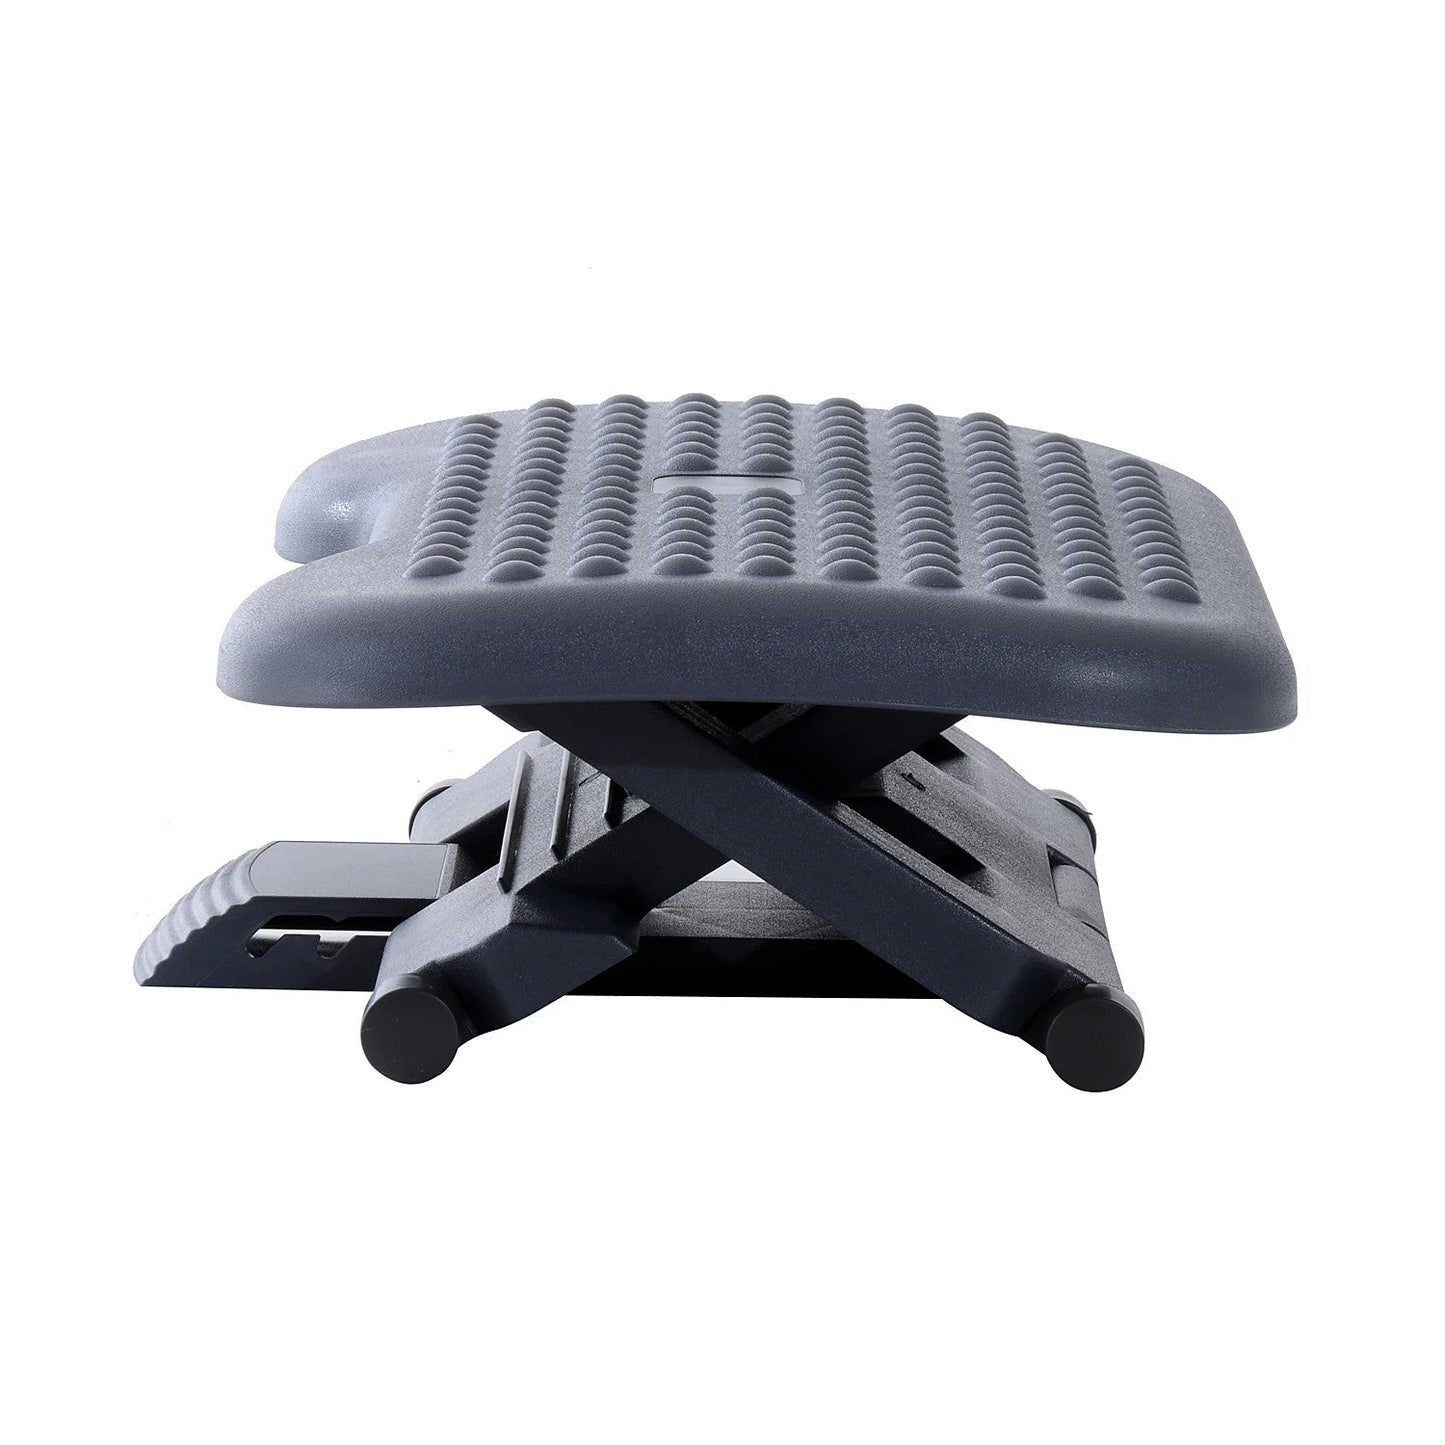 ProperAV Extra Home Under Desk Height & Angle Adjustable Footrest - Grey Black - maplin.co.uk